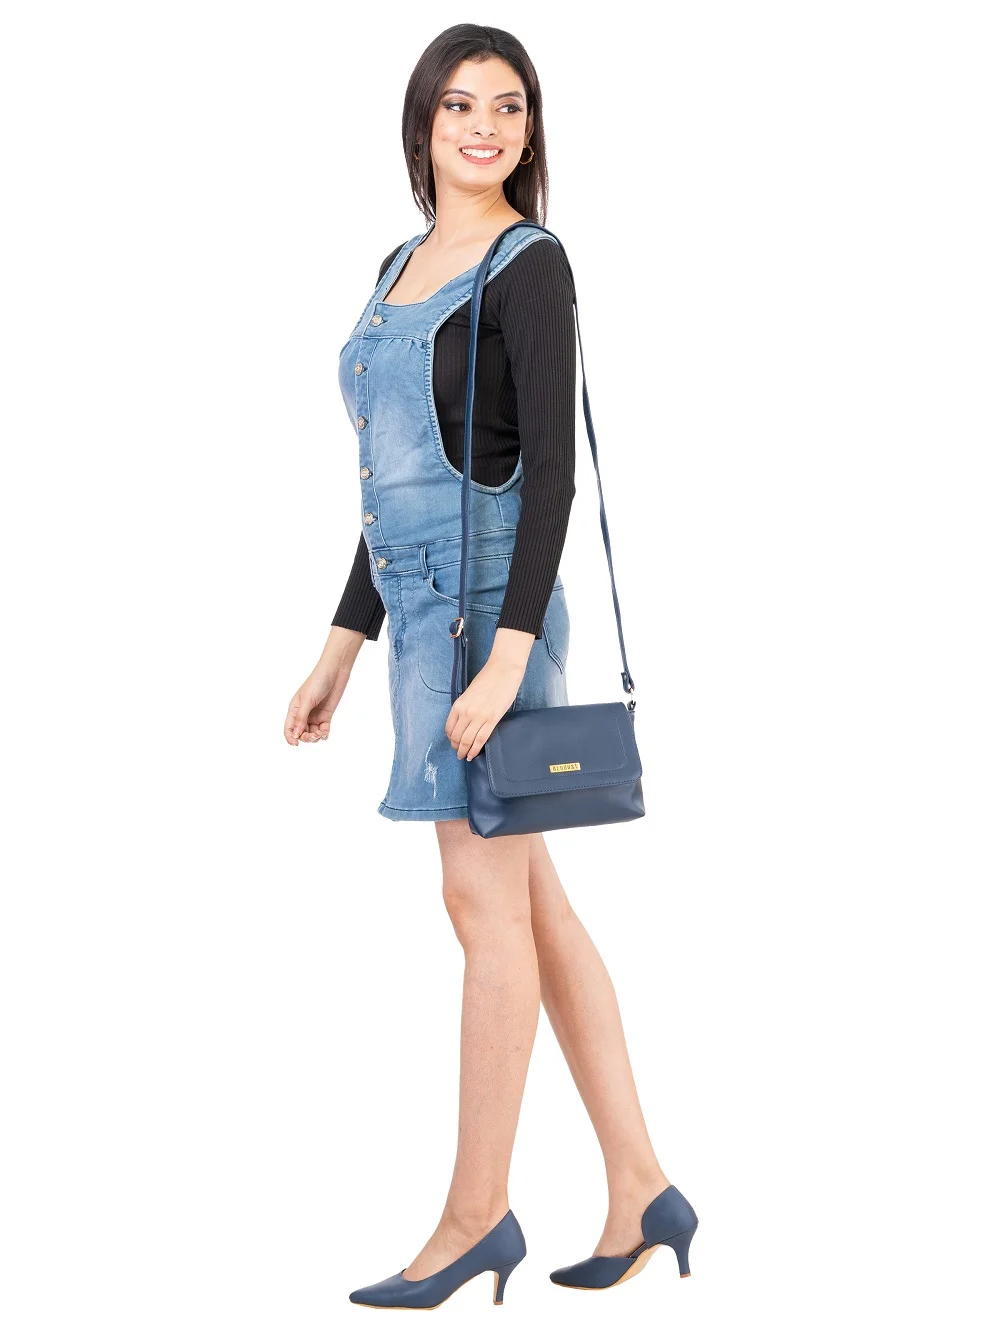 Buy trendy Cane Sling Bag online in India - Smitam Lifestyle